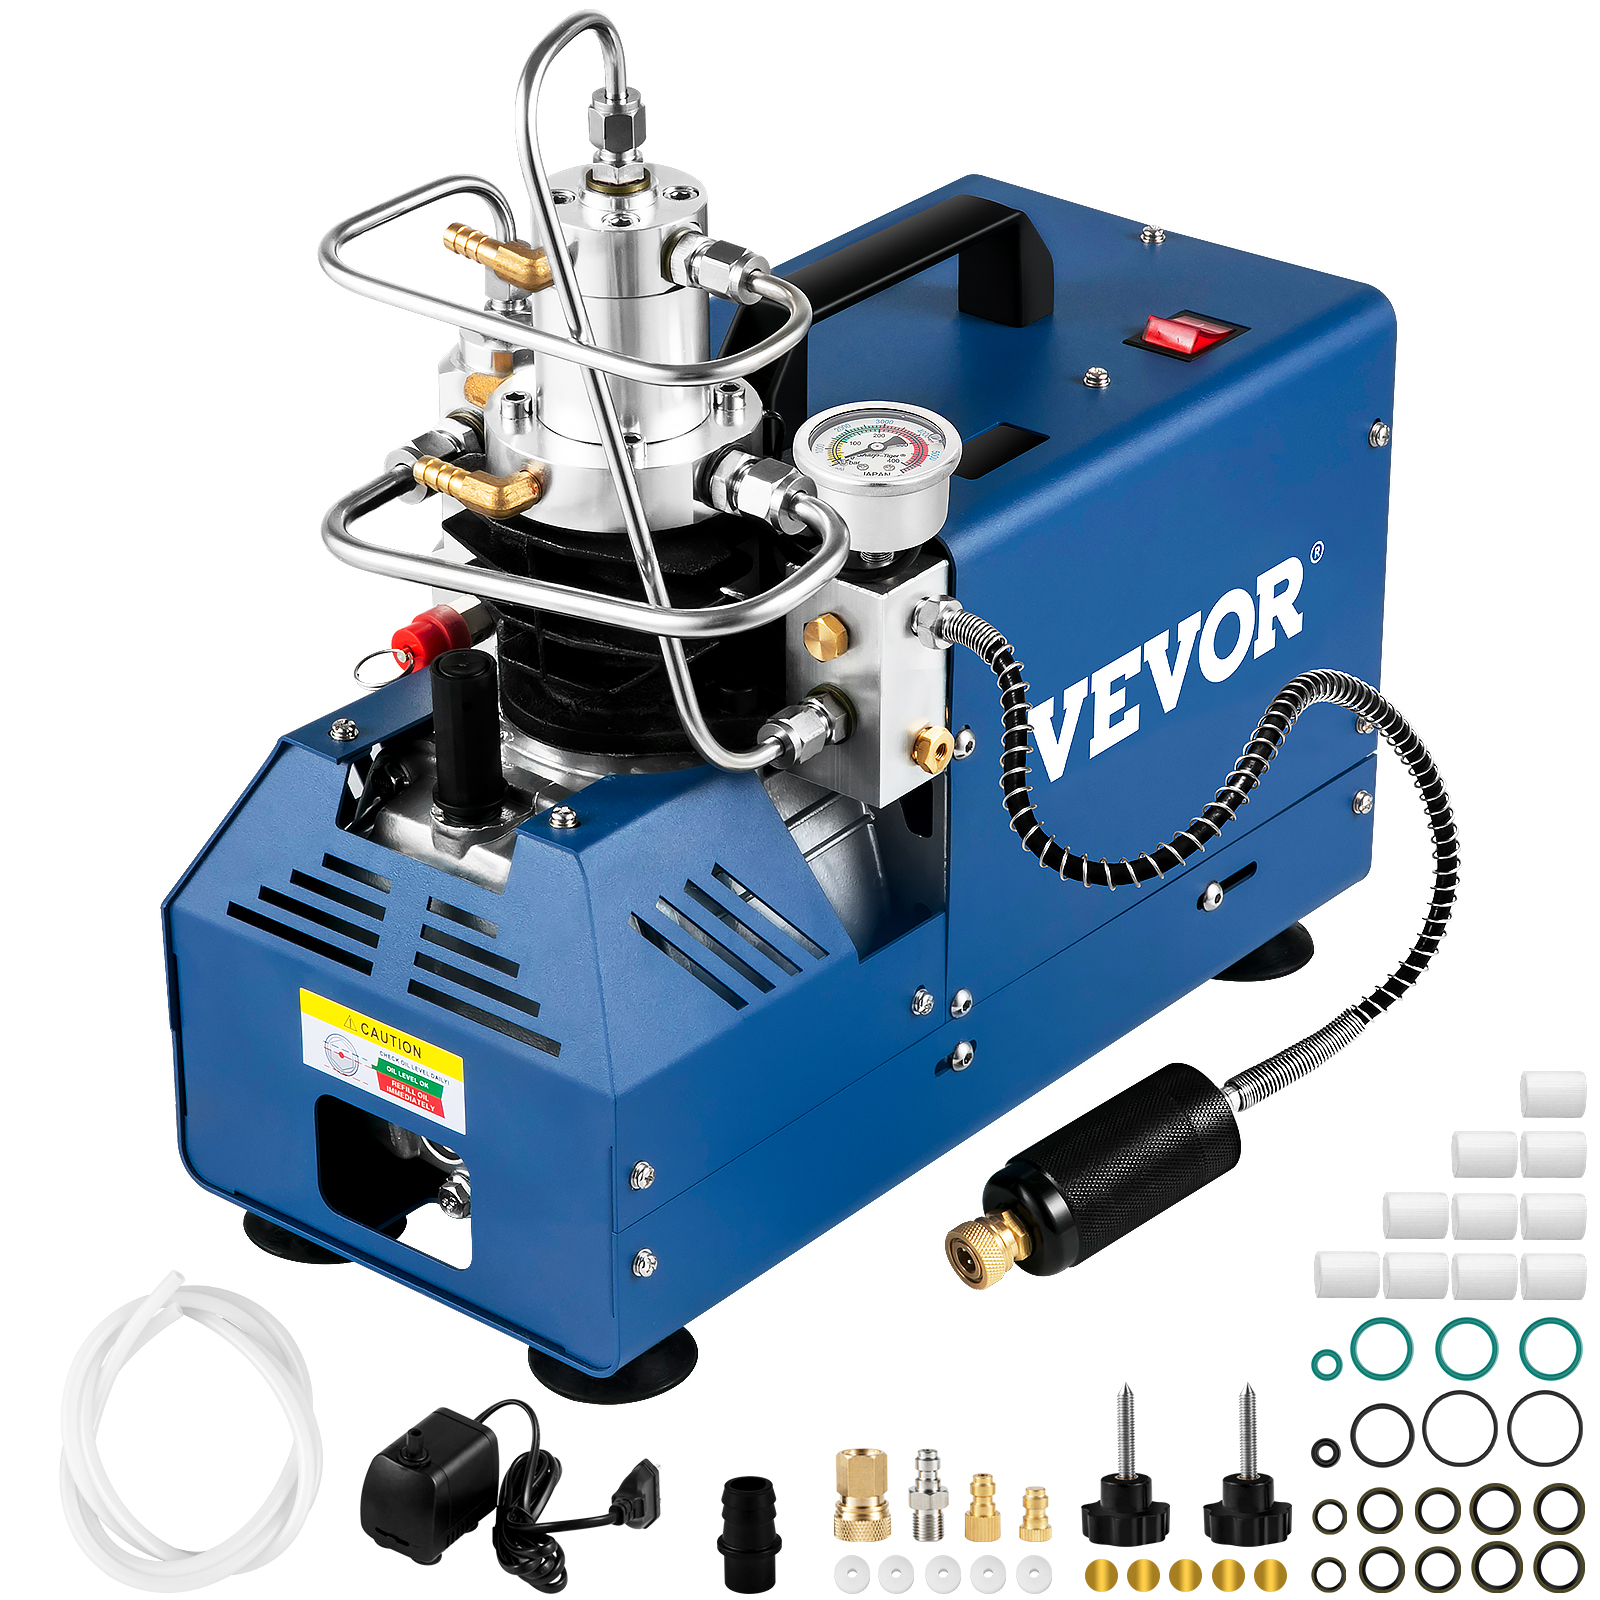 Vevor 30mpa/4500psi High Pressure Air Compressor Pcp Airscuba Air Pump 1800w от Vevor Many GEOs